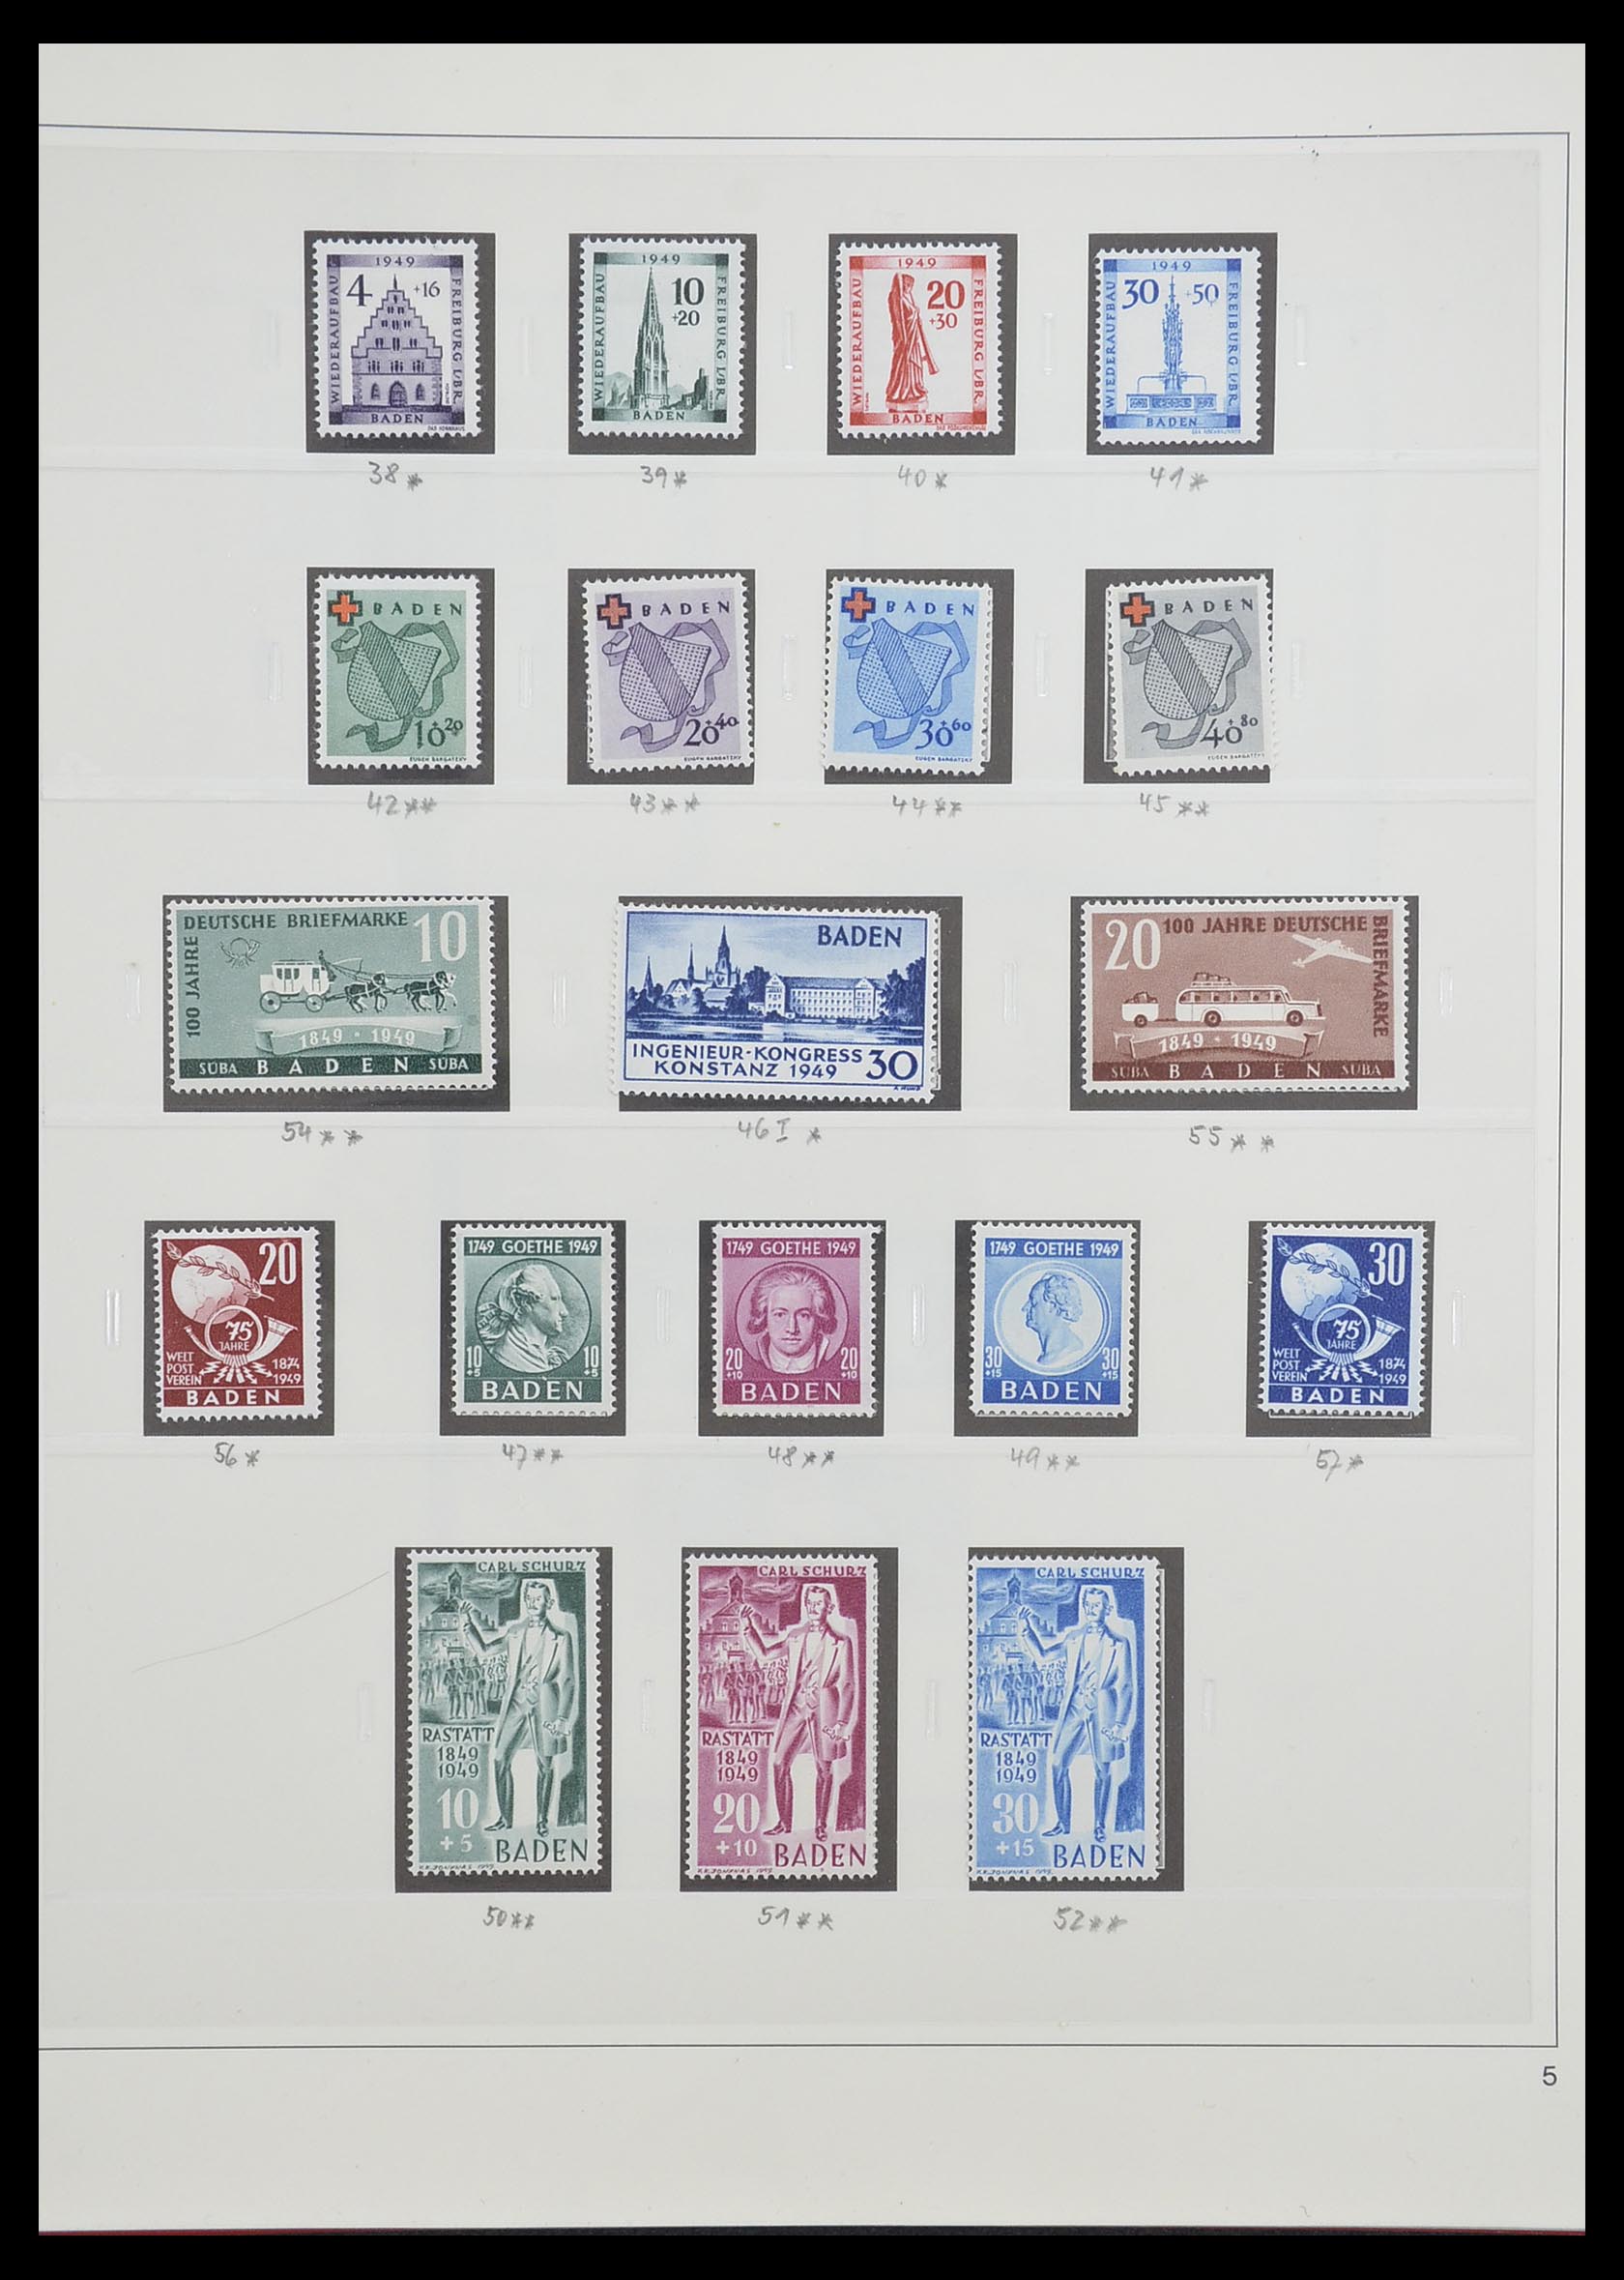 33208 021 - Stamp collection 33208 German Zones 1945-1949.